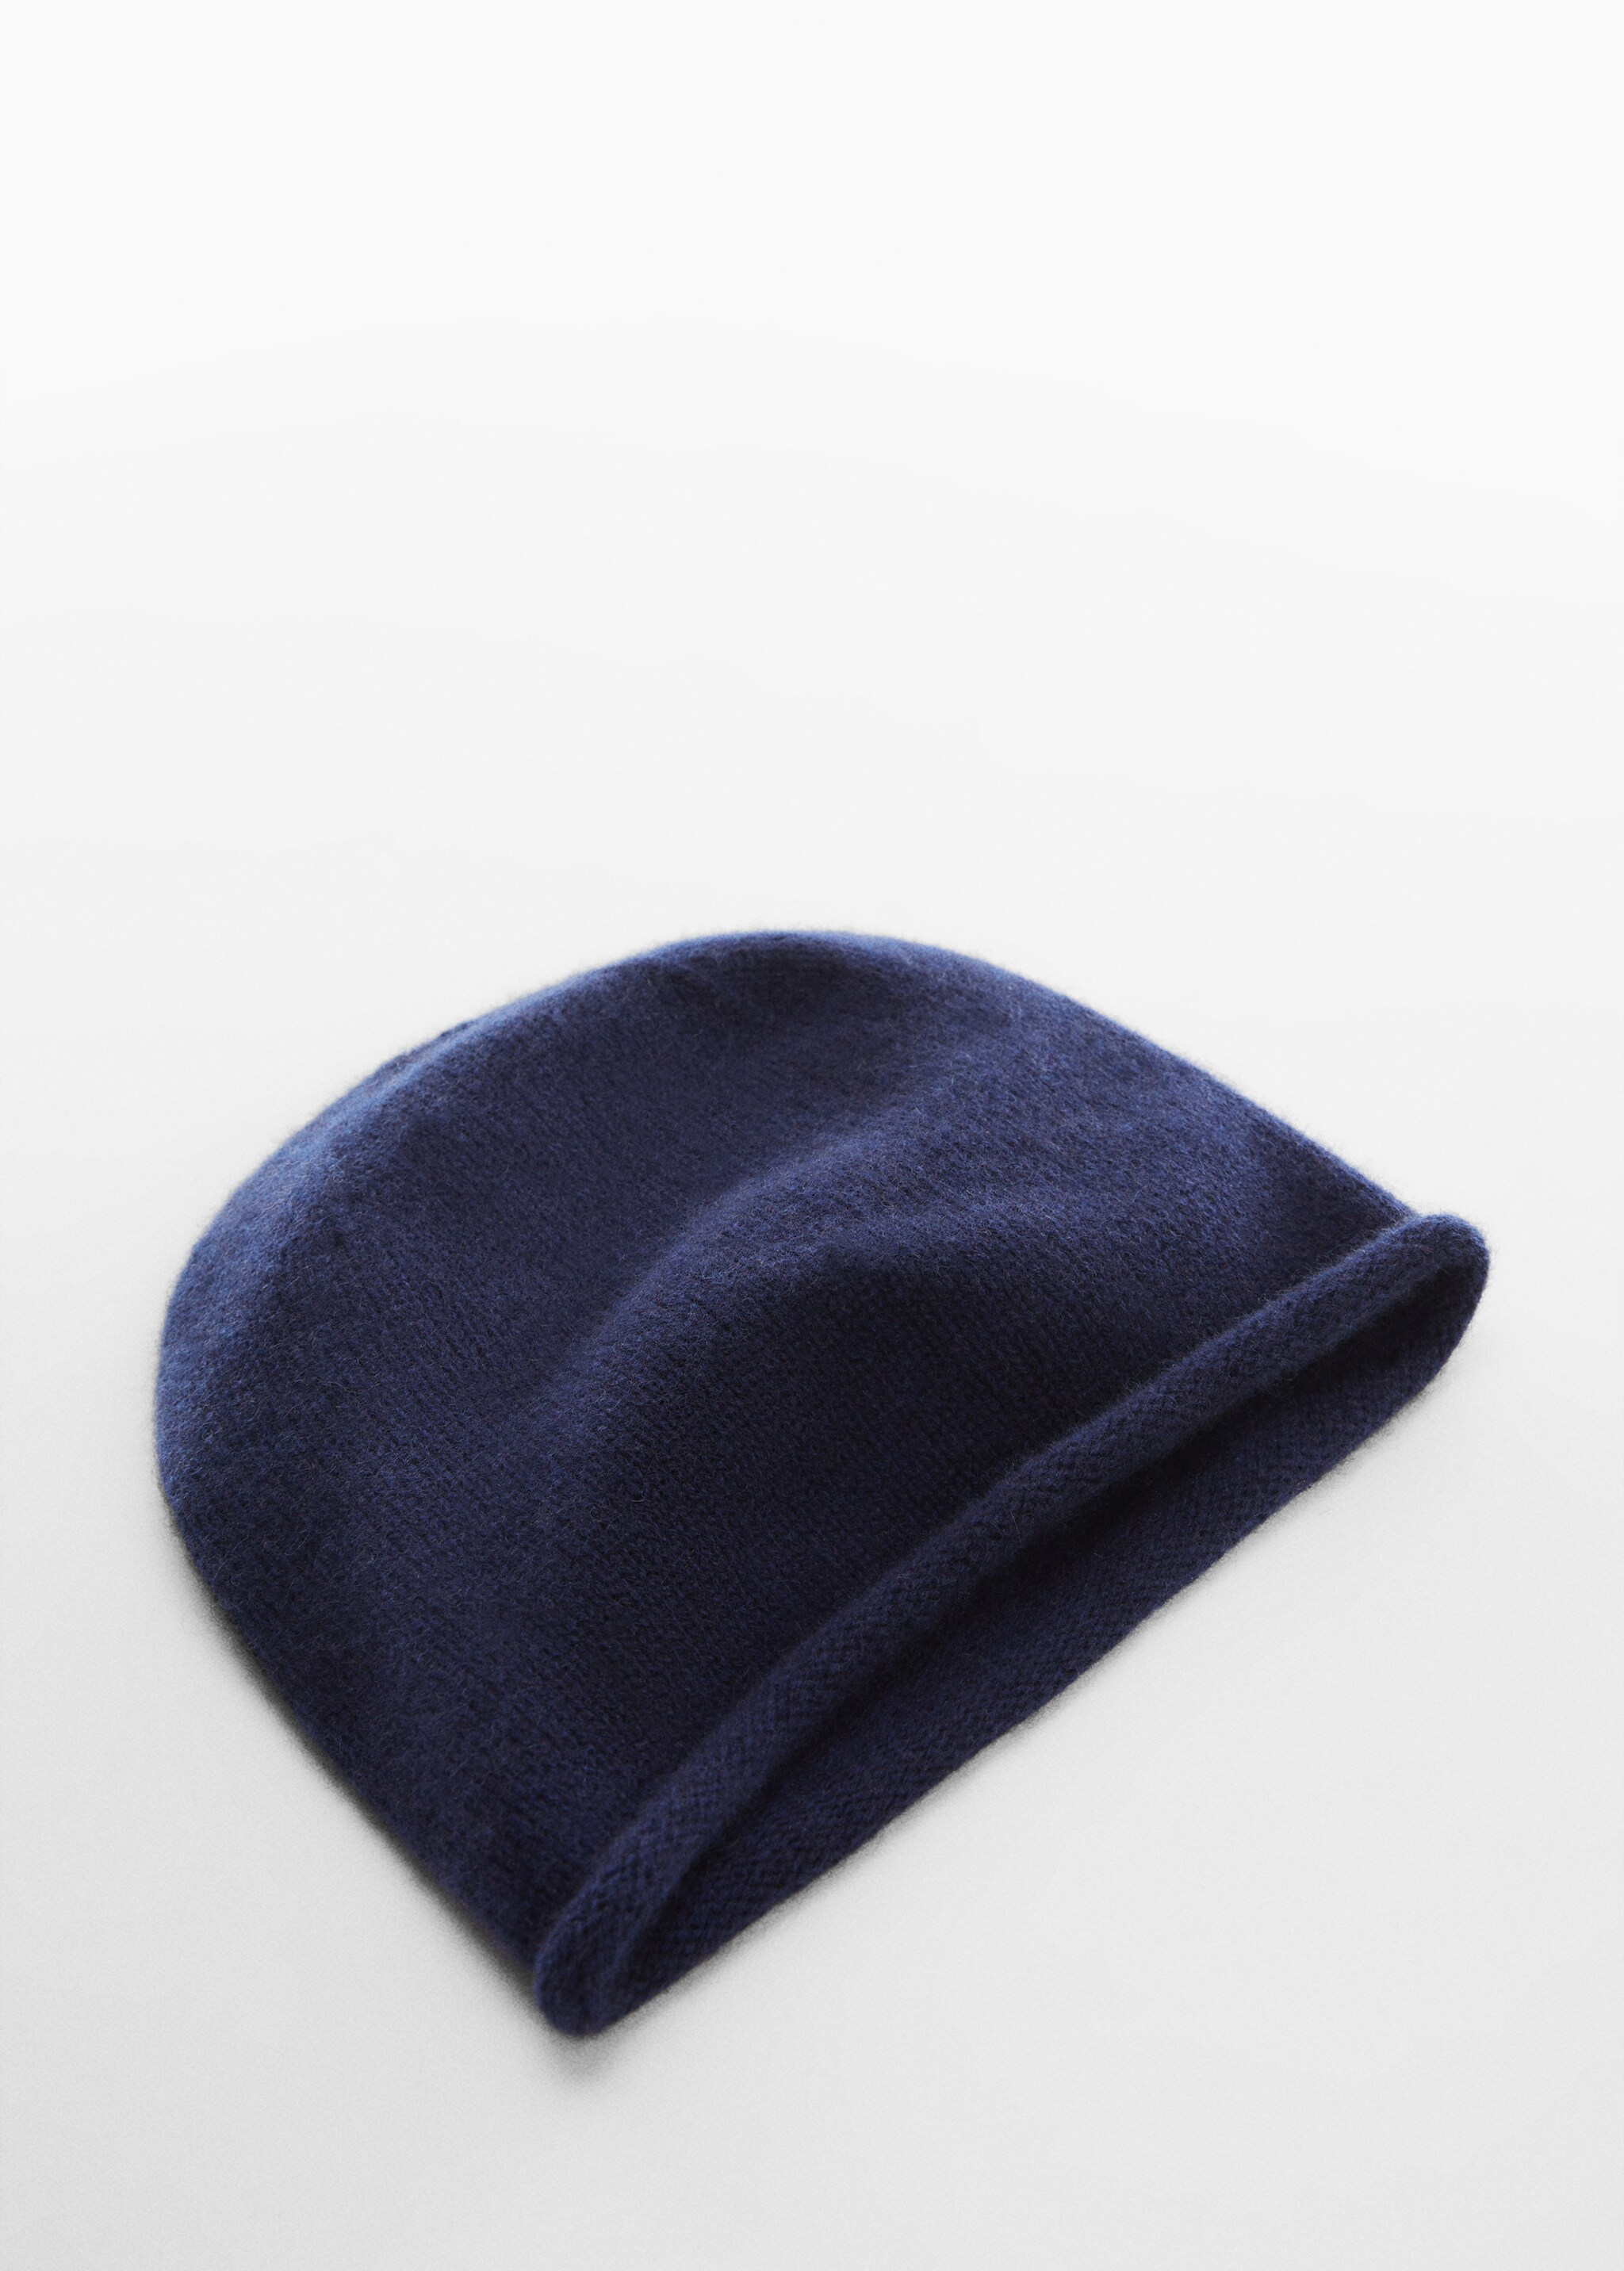 Cashmere knitted hat - Medium plane